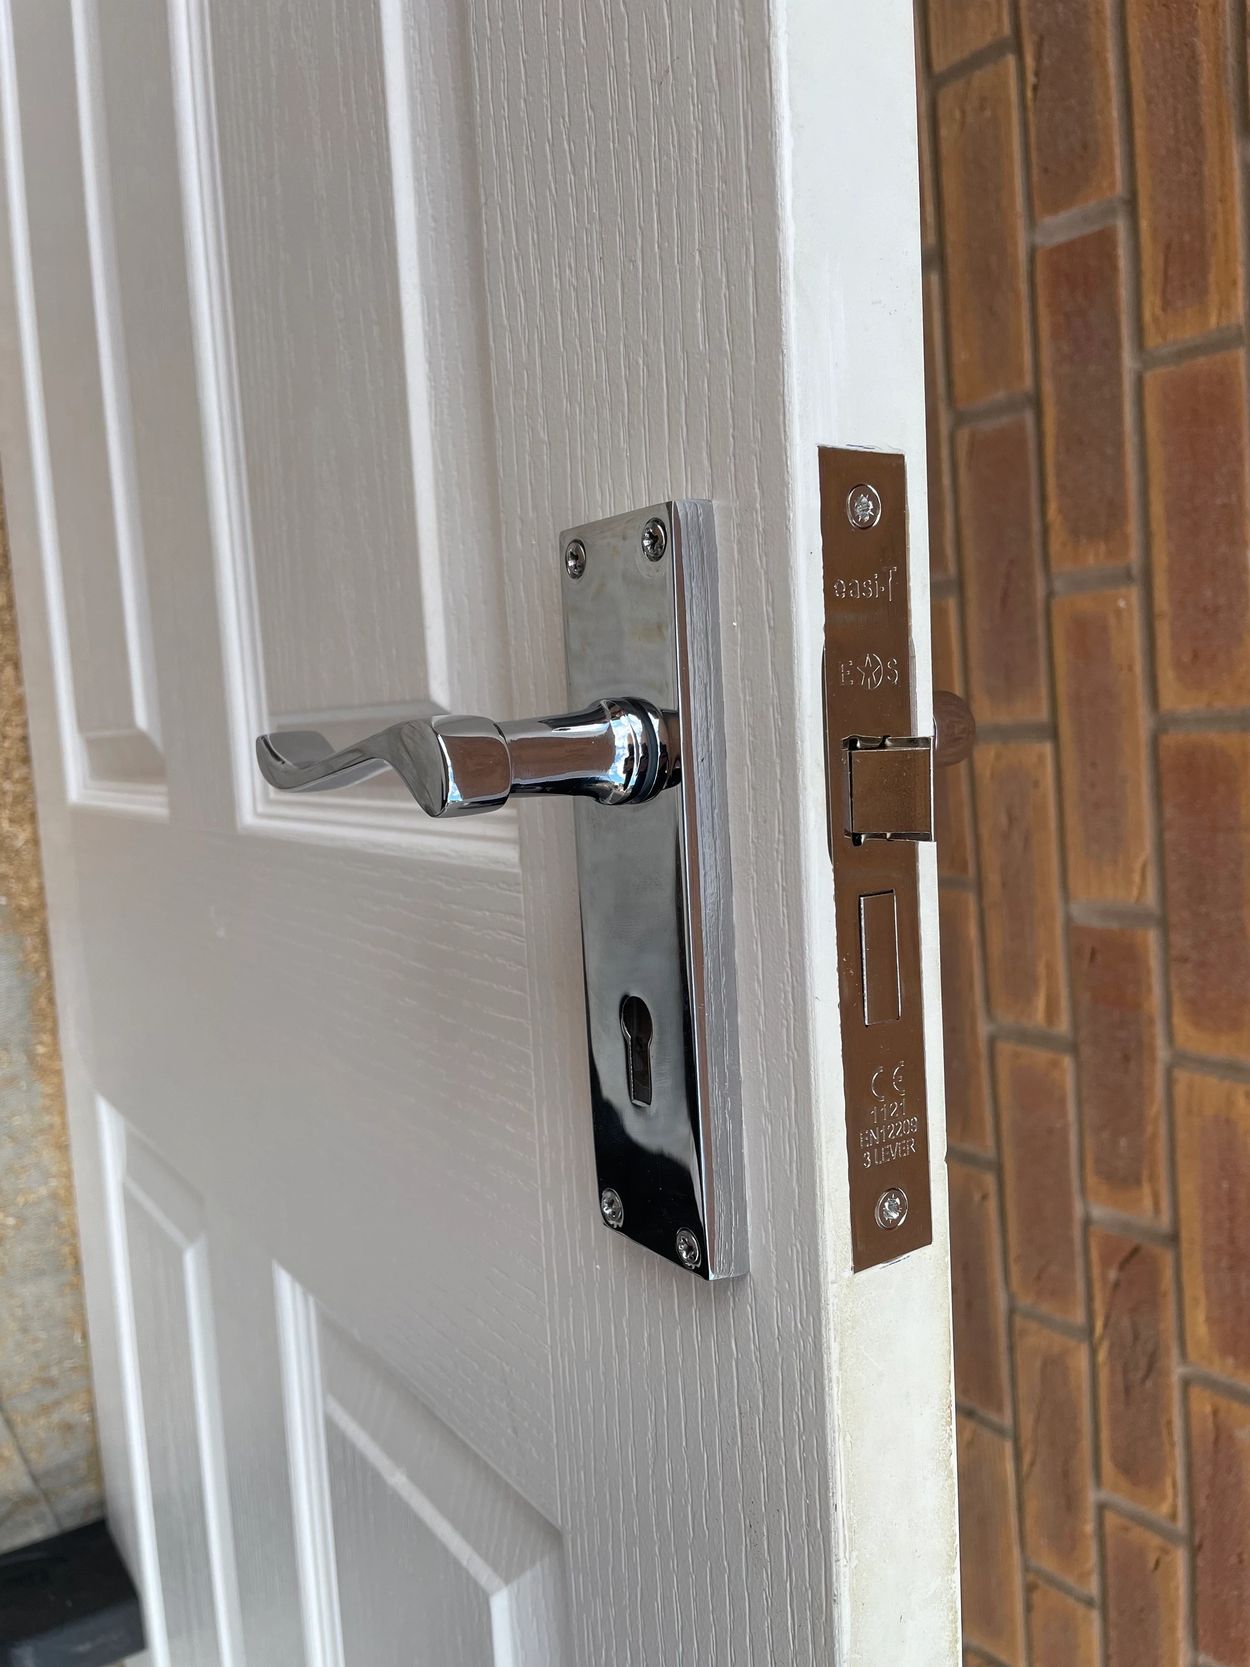 Locks added to internal doors